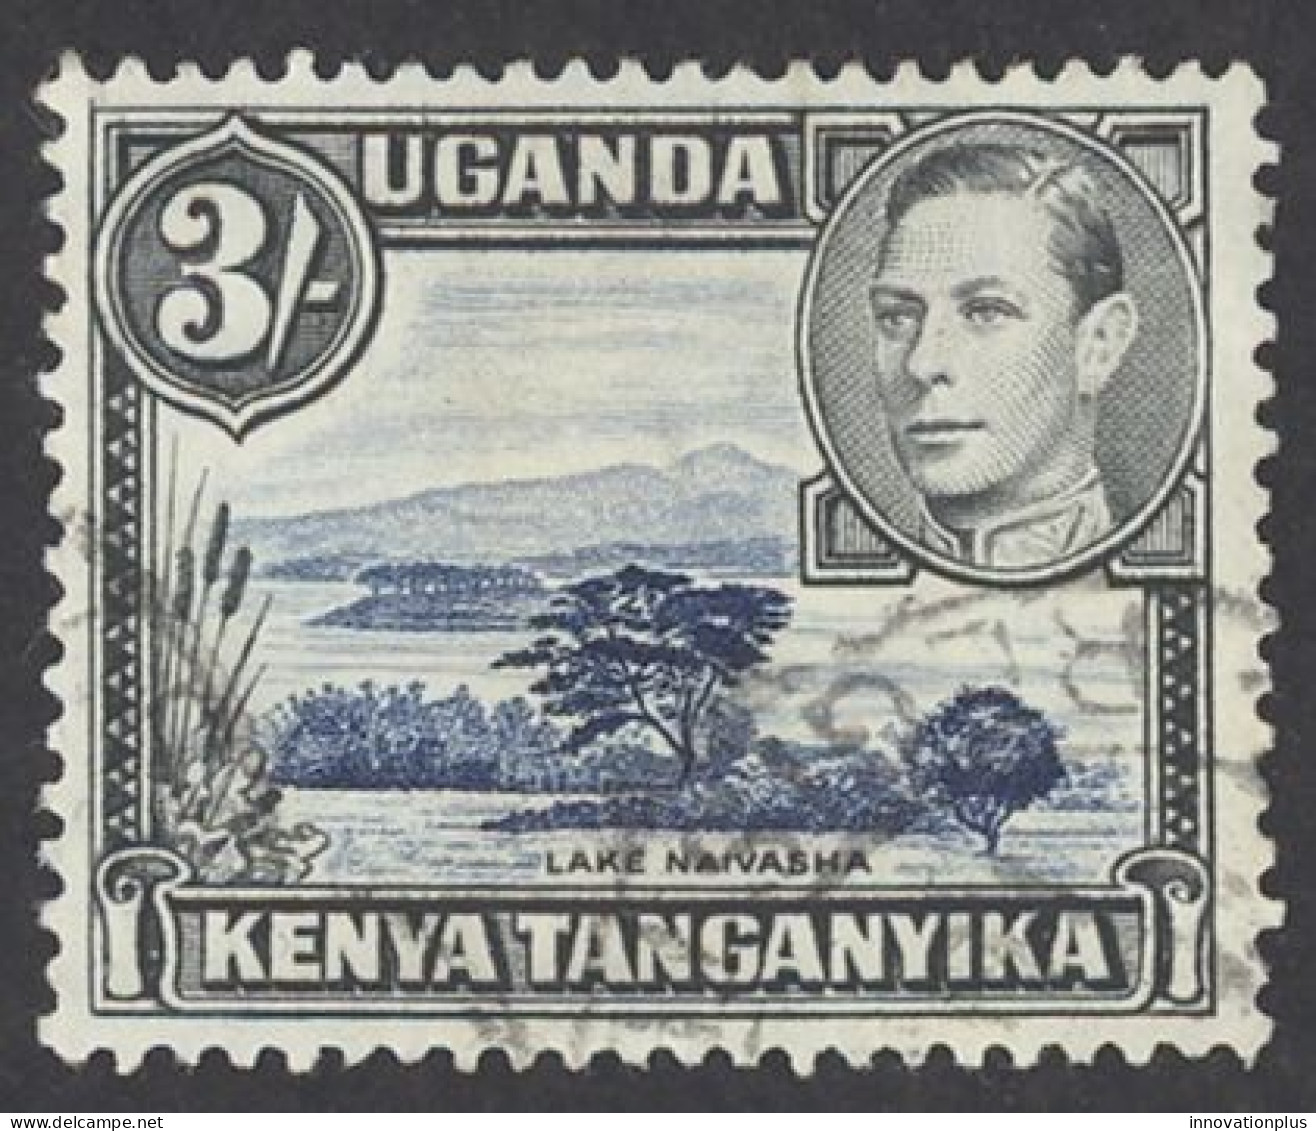 Kenya, Uganda, Tanzania Sc# 82 Used 1950 3sh King George VI Scenes  - Kenya, Uganda & Tanzania